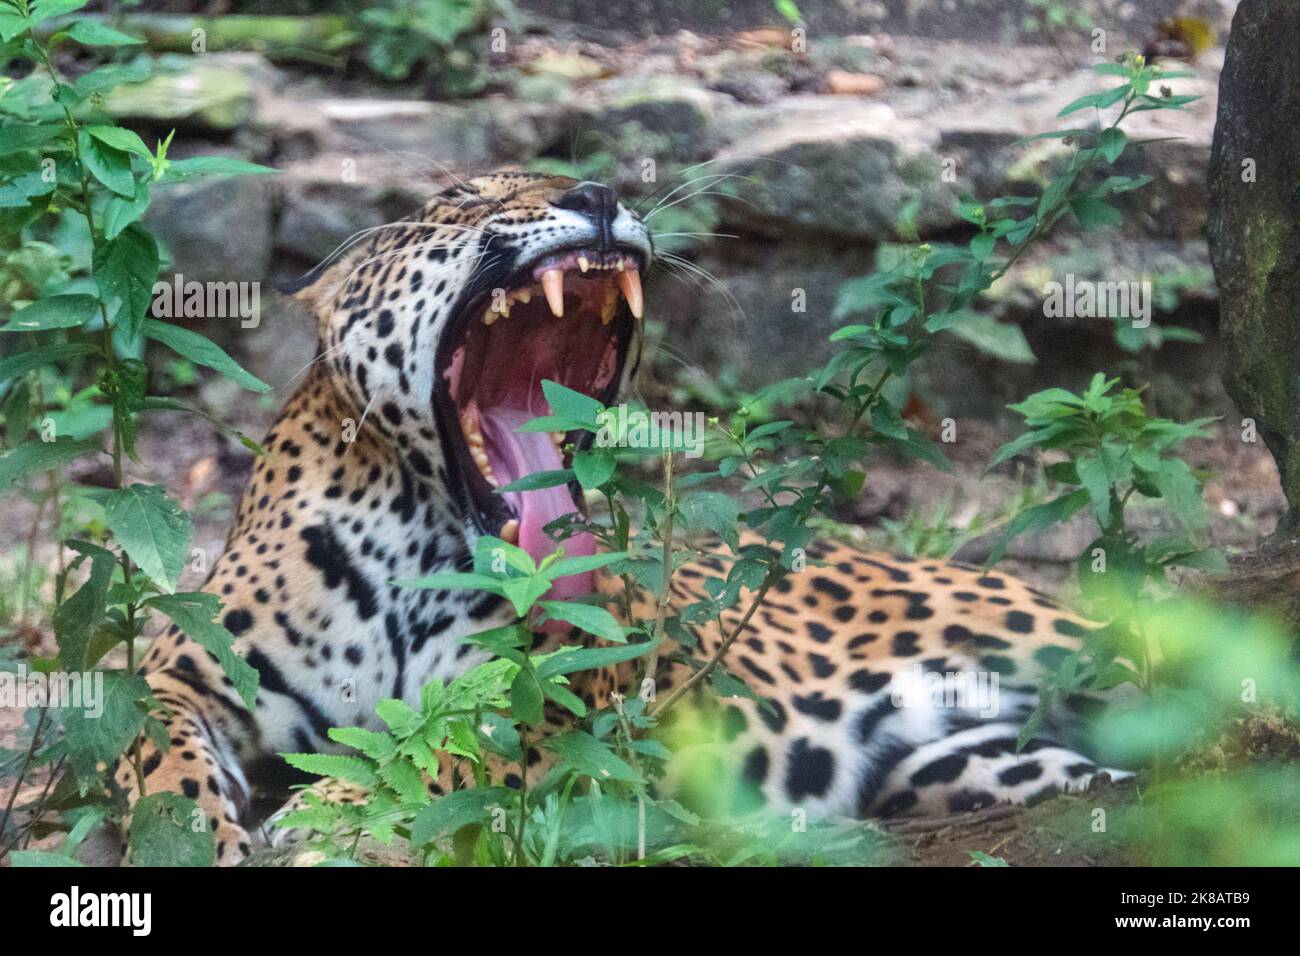 Female jaguar in zoo cage in Chiapas, Mexico. Big cat (Panthera onca) yawning in enclosure Stock Photo